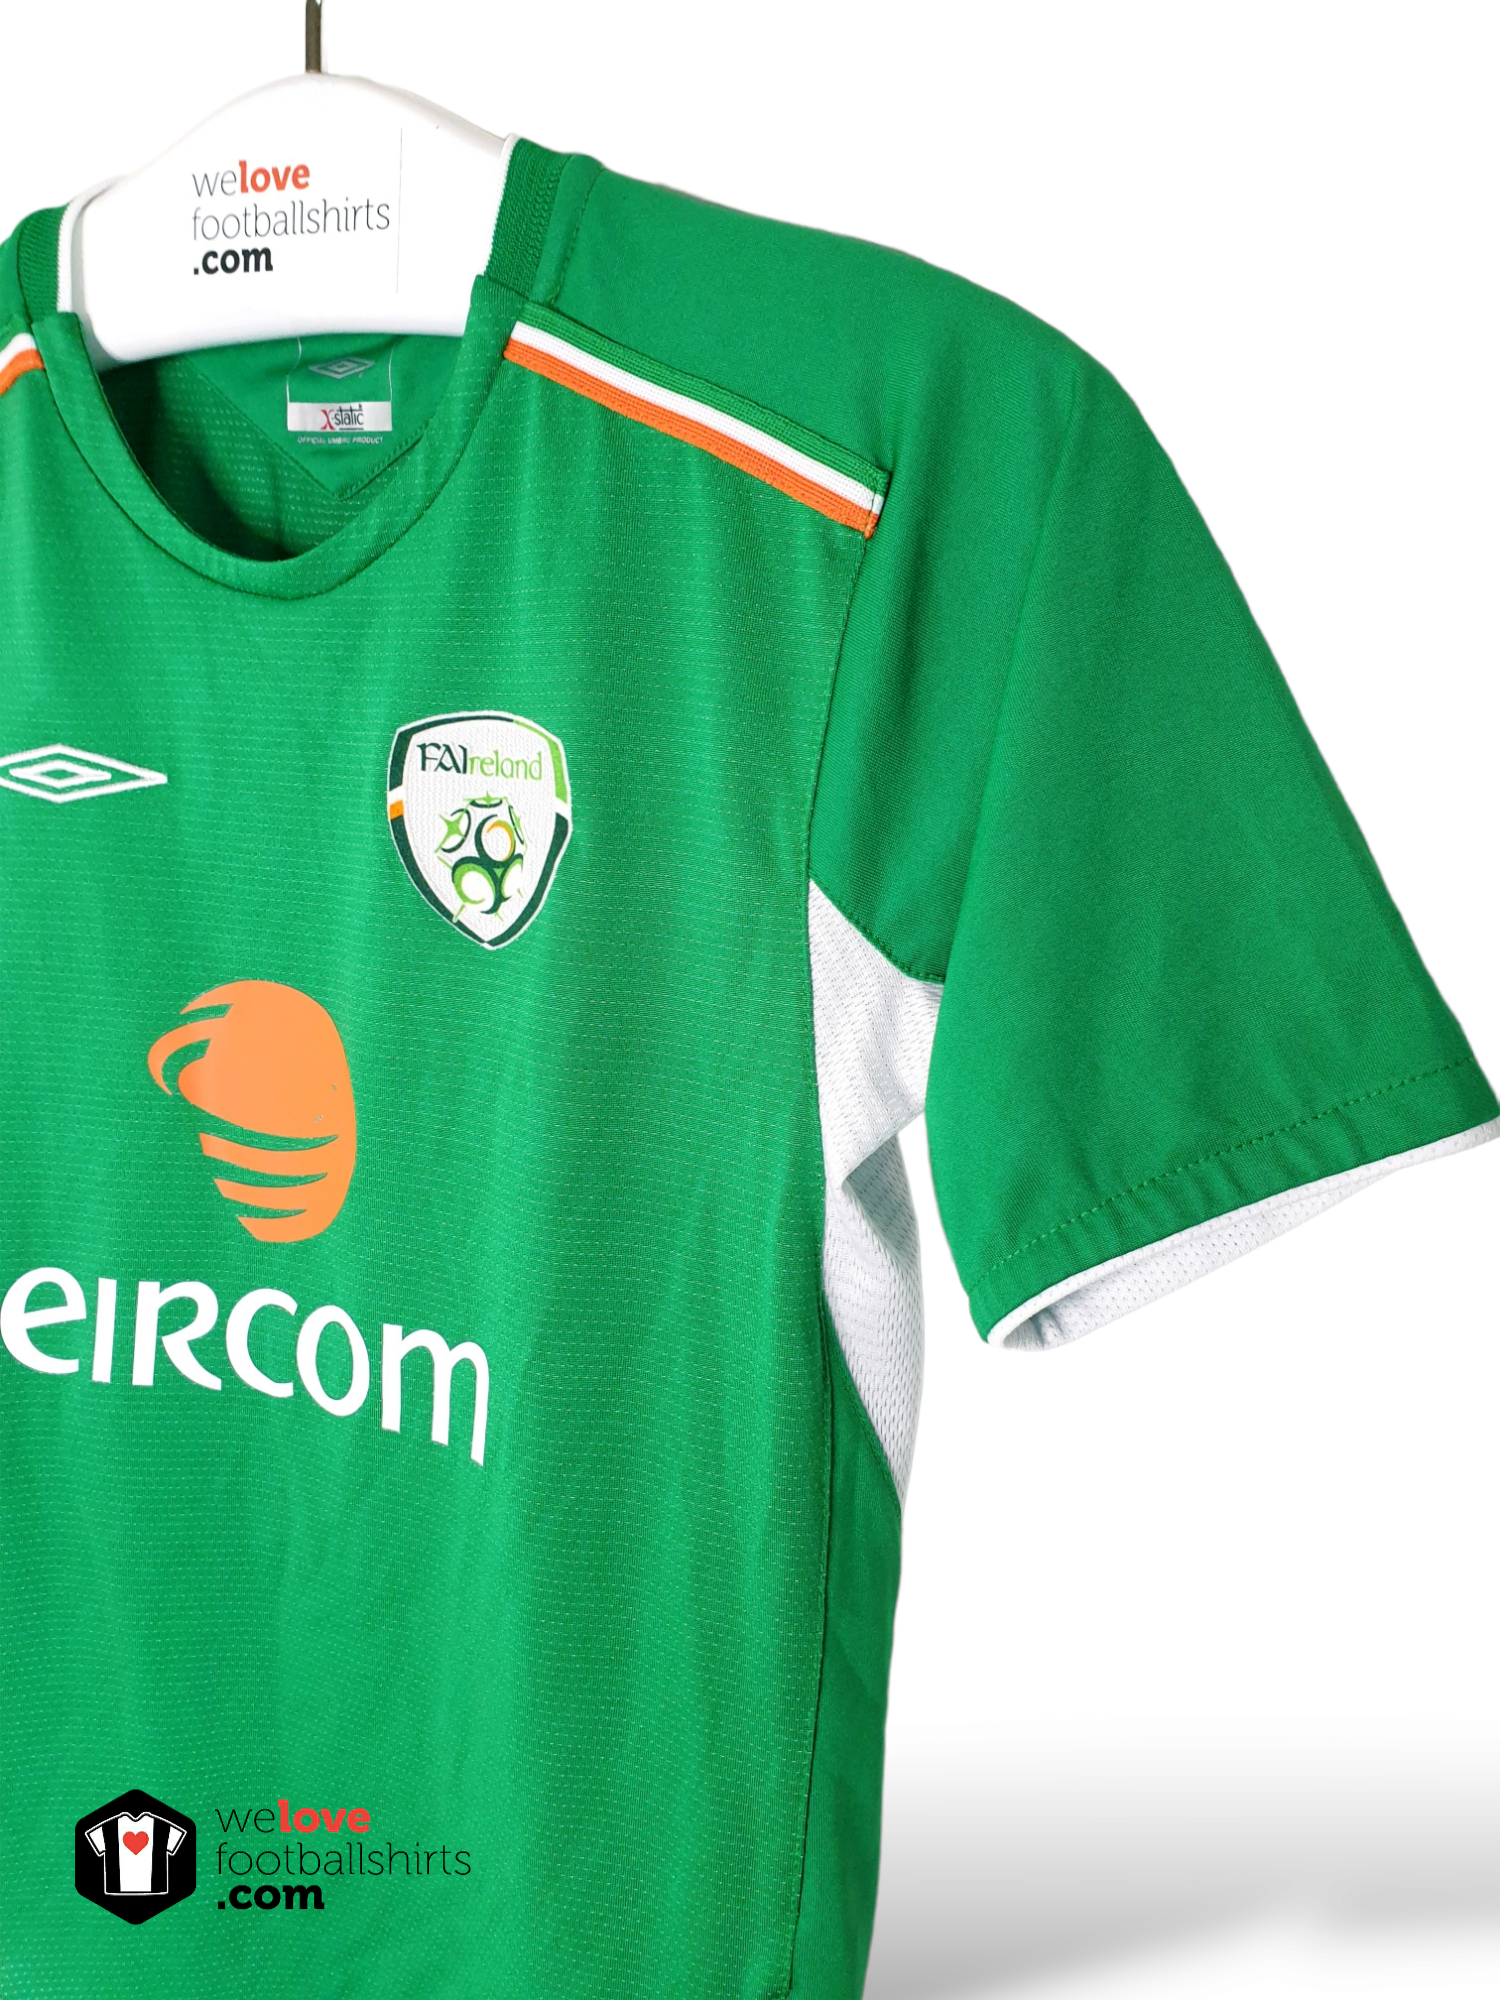 Umbro football shirt Ireland 2004/06 - Welovefootballshirts.com